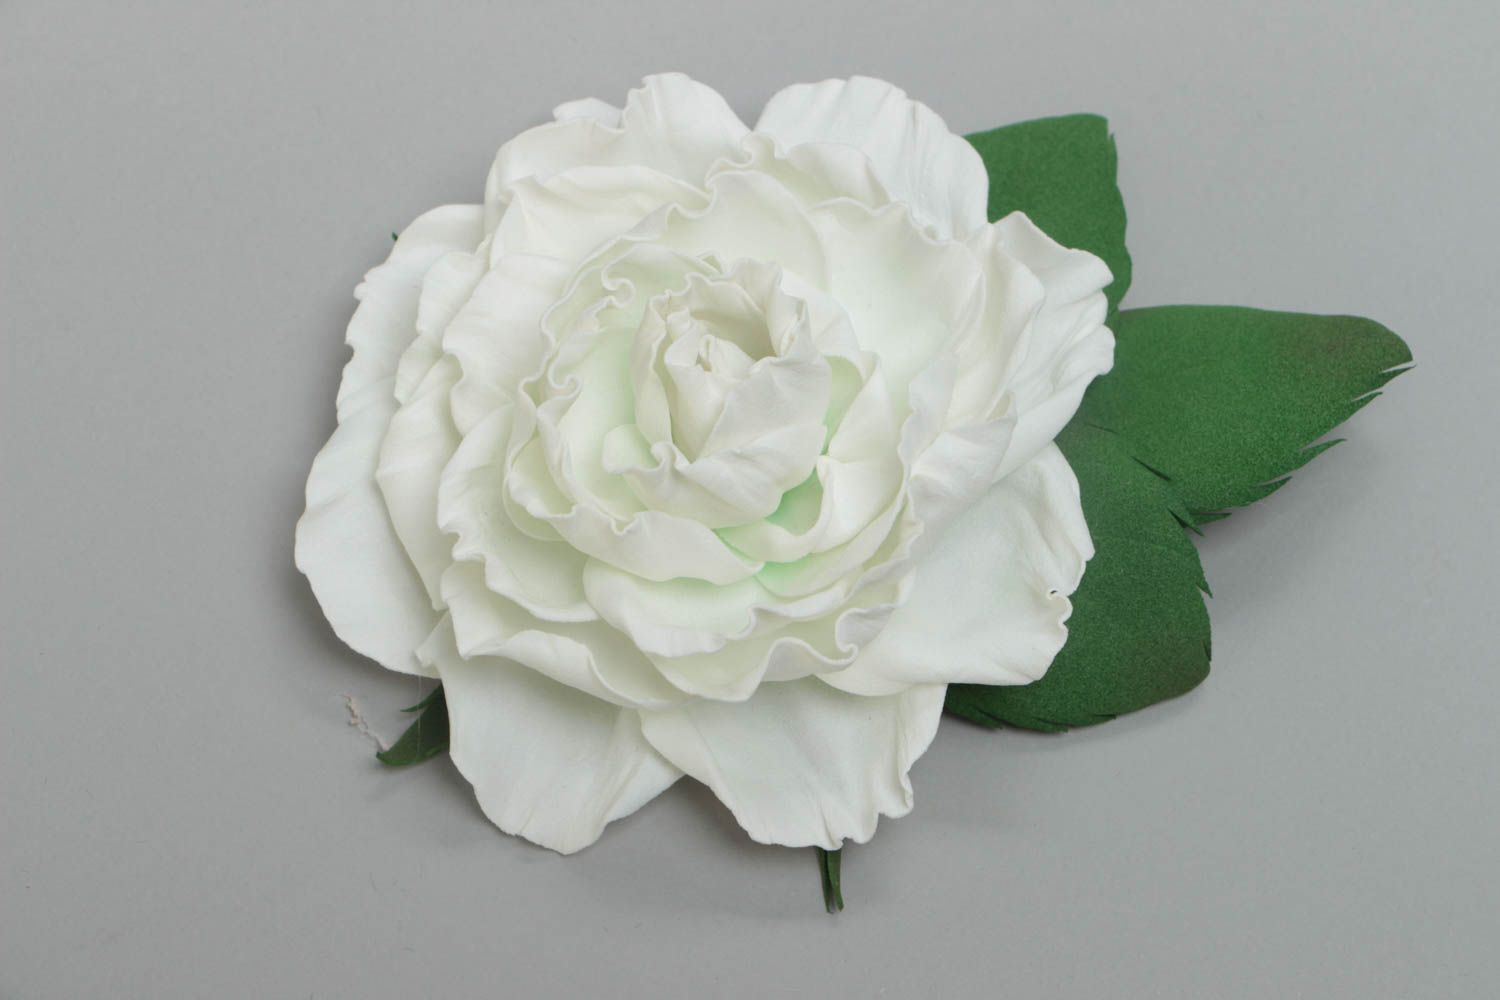 Handmade designer brooch with large volume white foamiran flower and green leaf photo 2